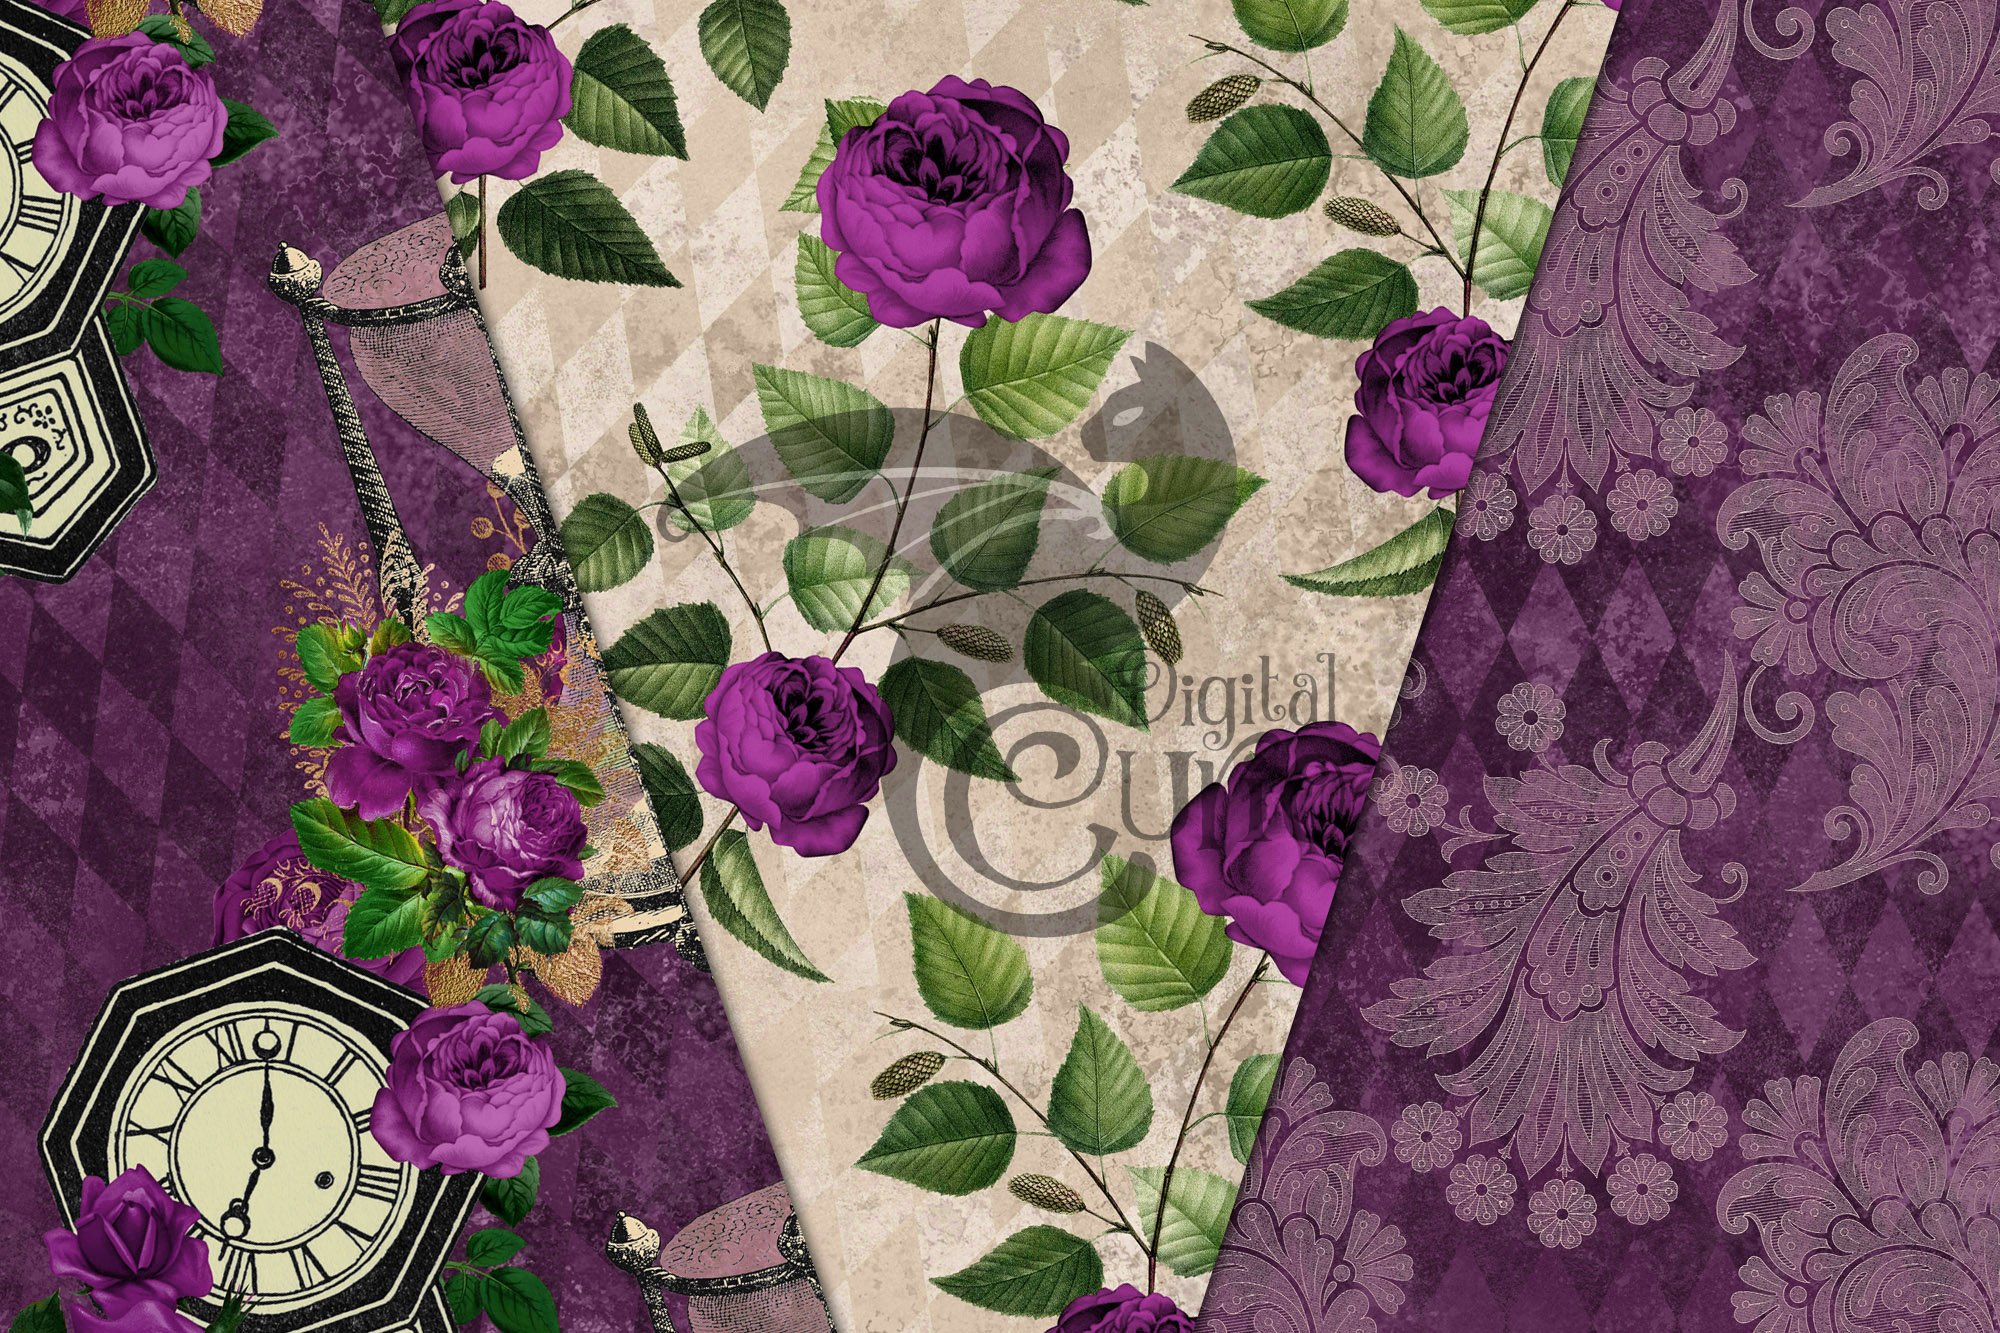 Harlequin Purple Rose Digital Paper preview image.